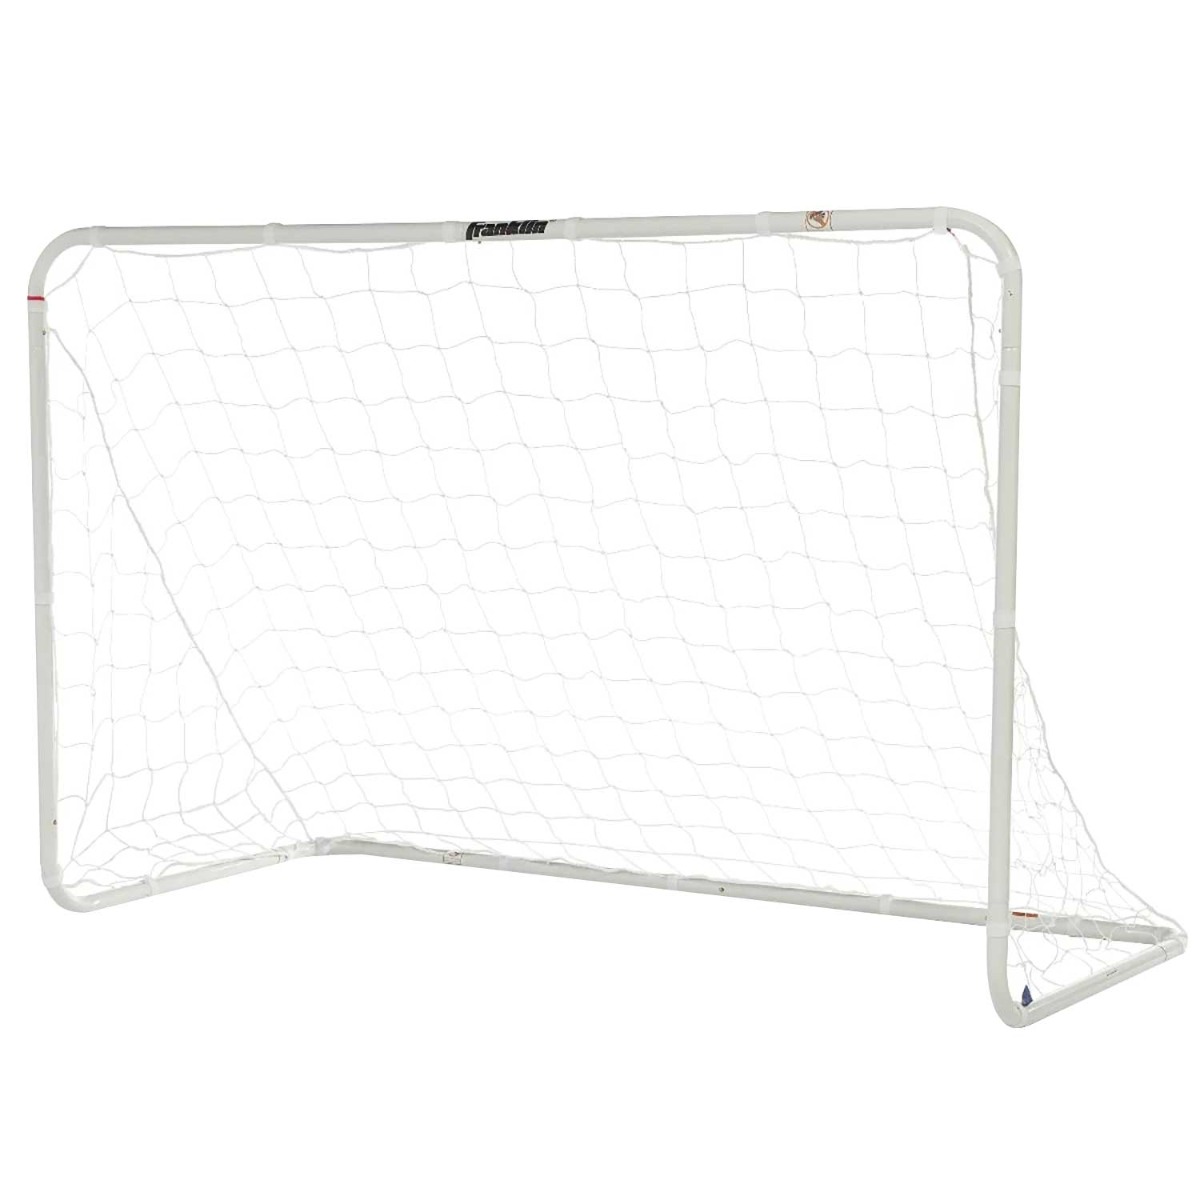 Franklin Non-Folding Steel Soccer Goal - 6'x4'